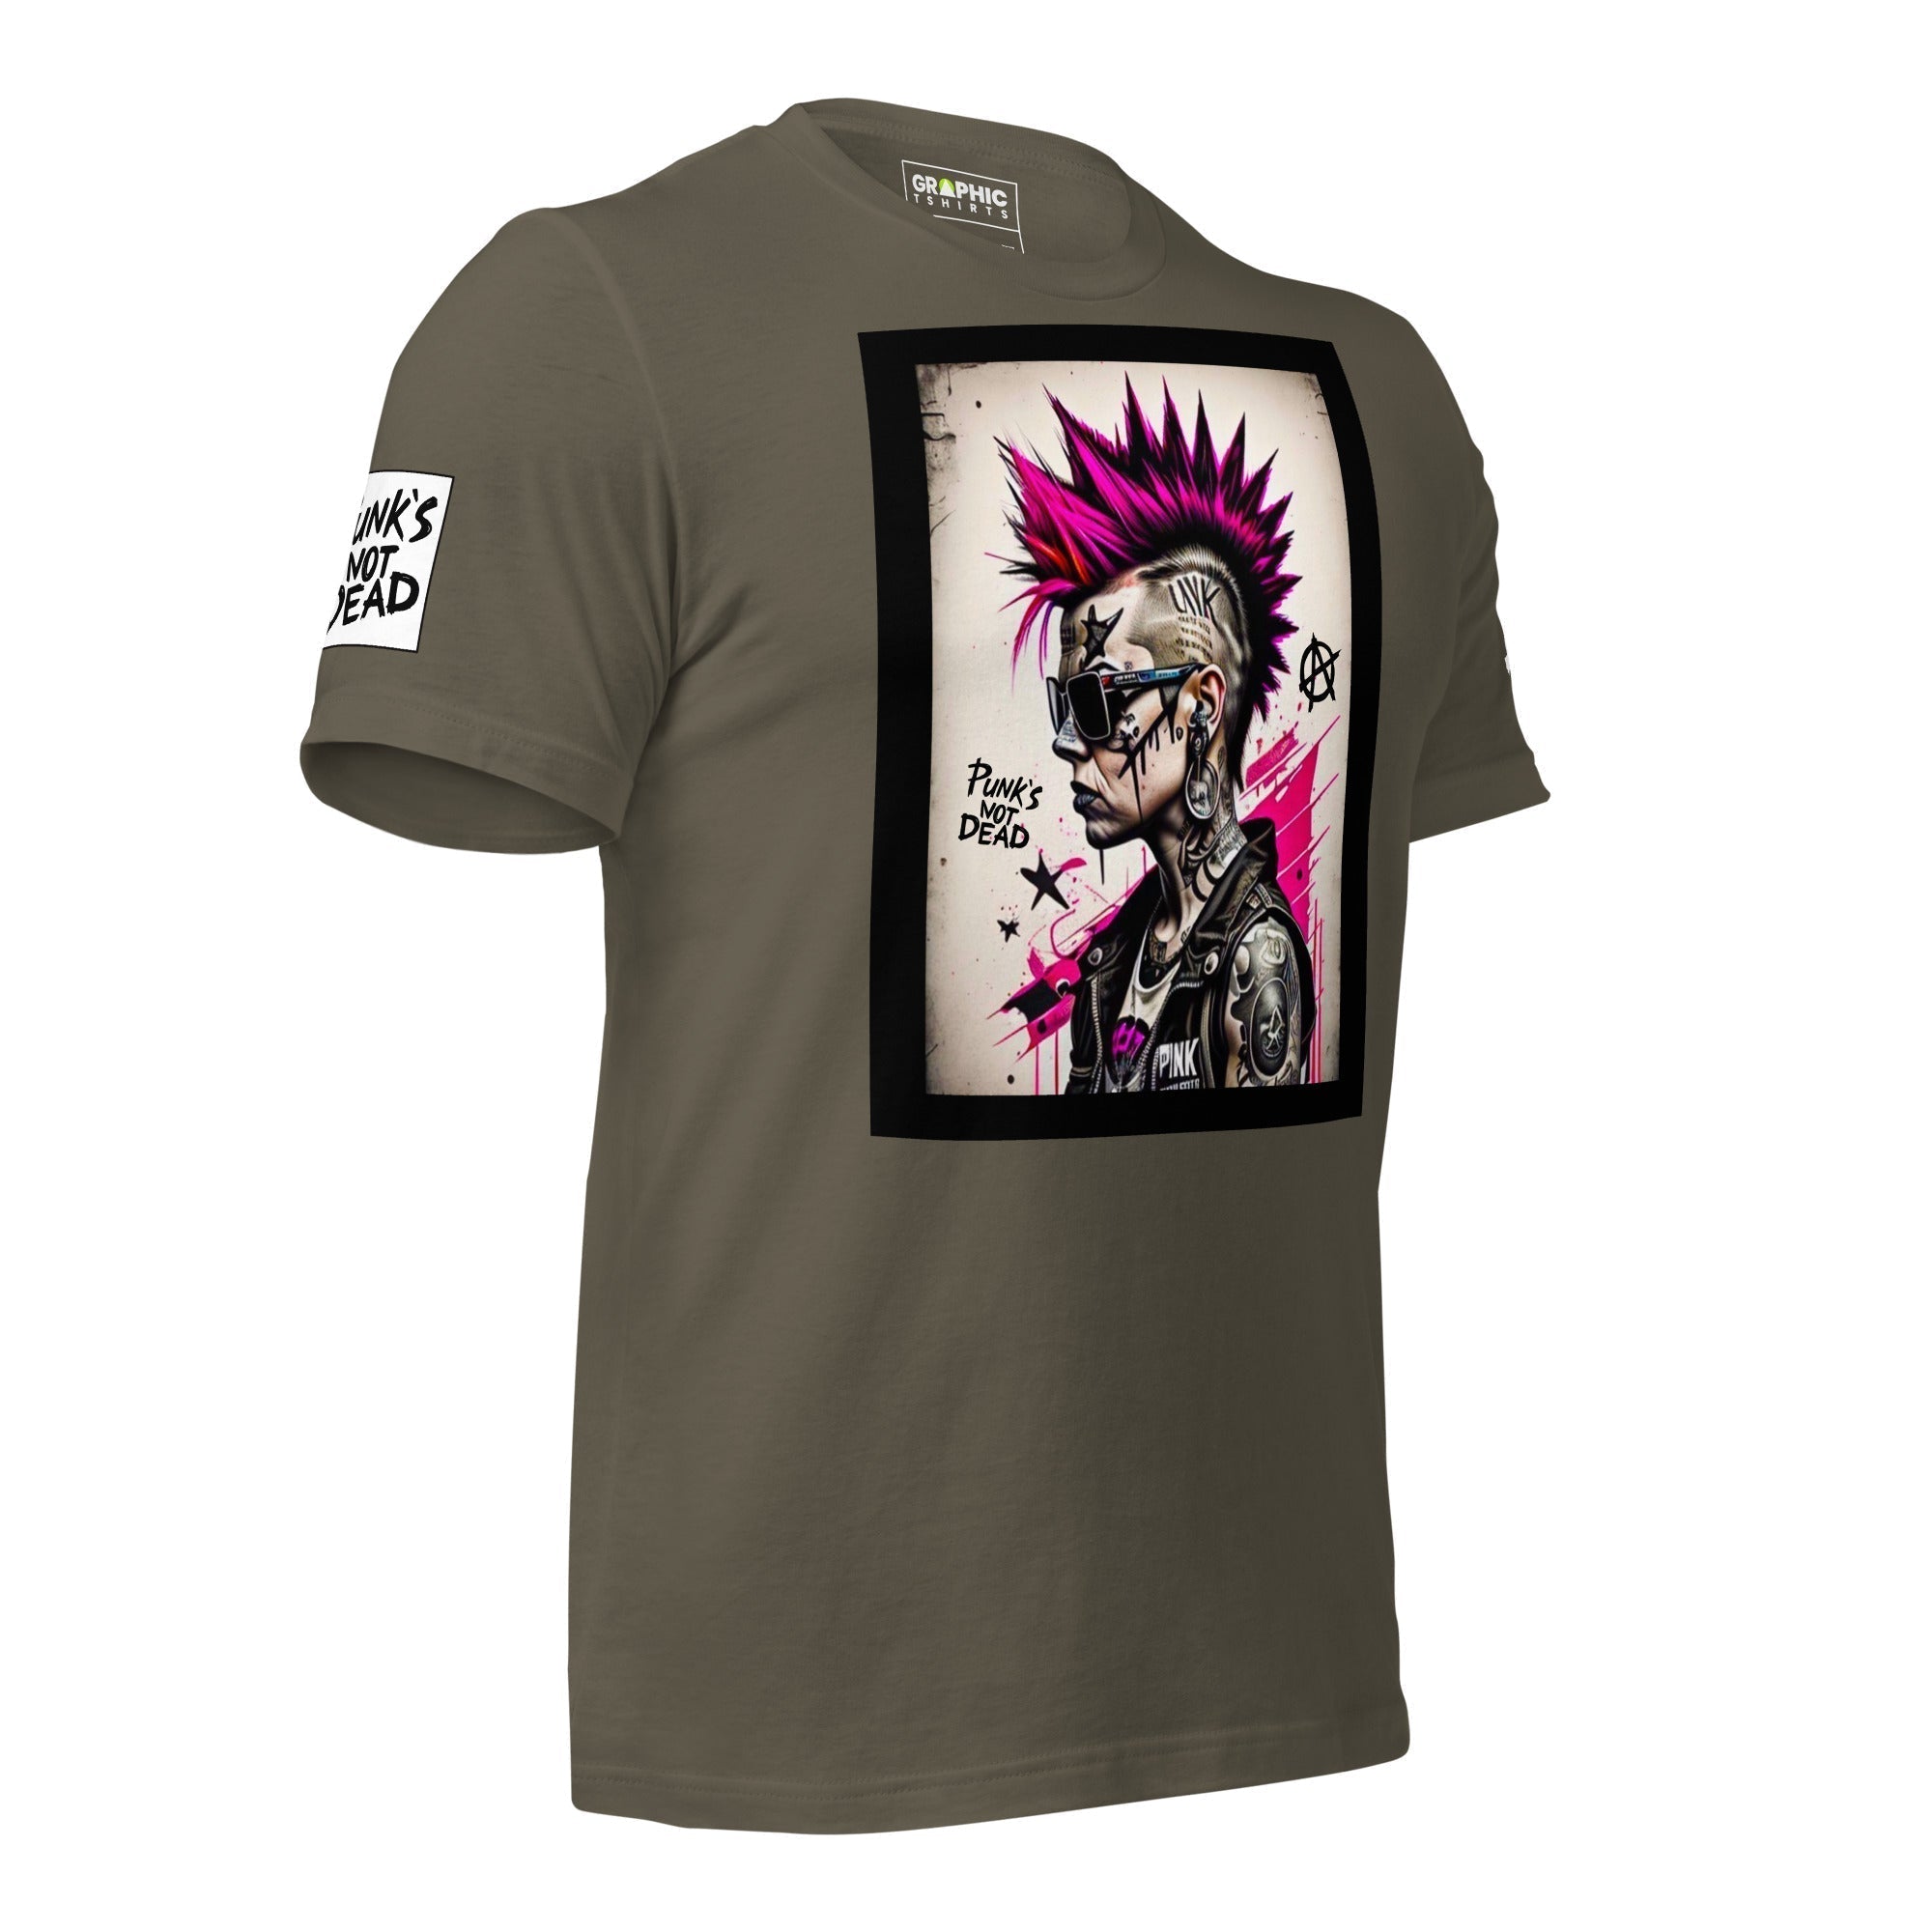 Unisex Crew Neck T-Shirt - Punk Rock Series Sector 23 - GRAPHIC T-SHIRTS